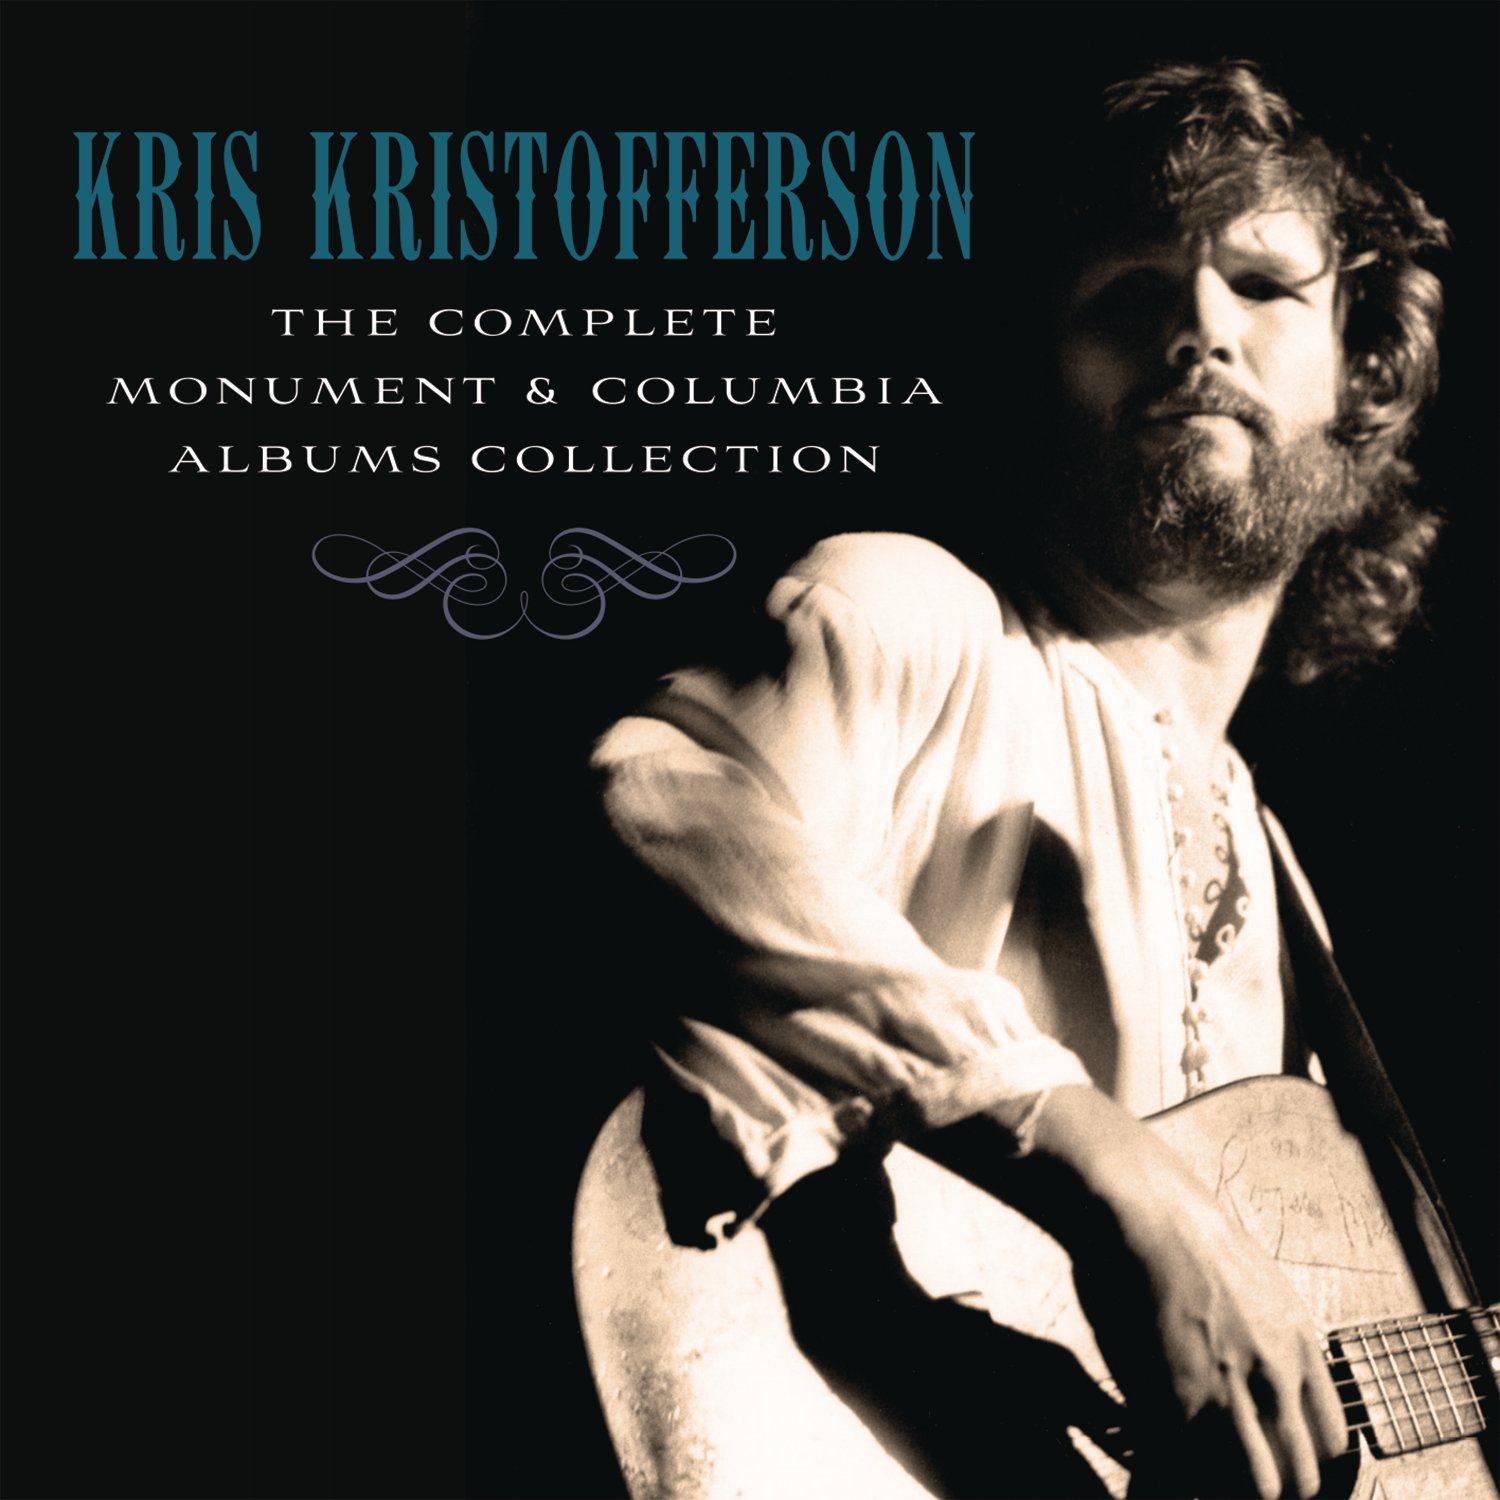 Kris Kristofferson – The Complete Monument & Columbia Albums Collection (2016) [HDTracks FLAC 24bit/96kHz]